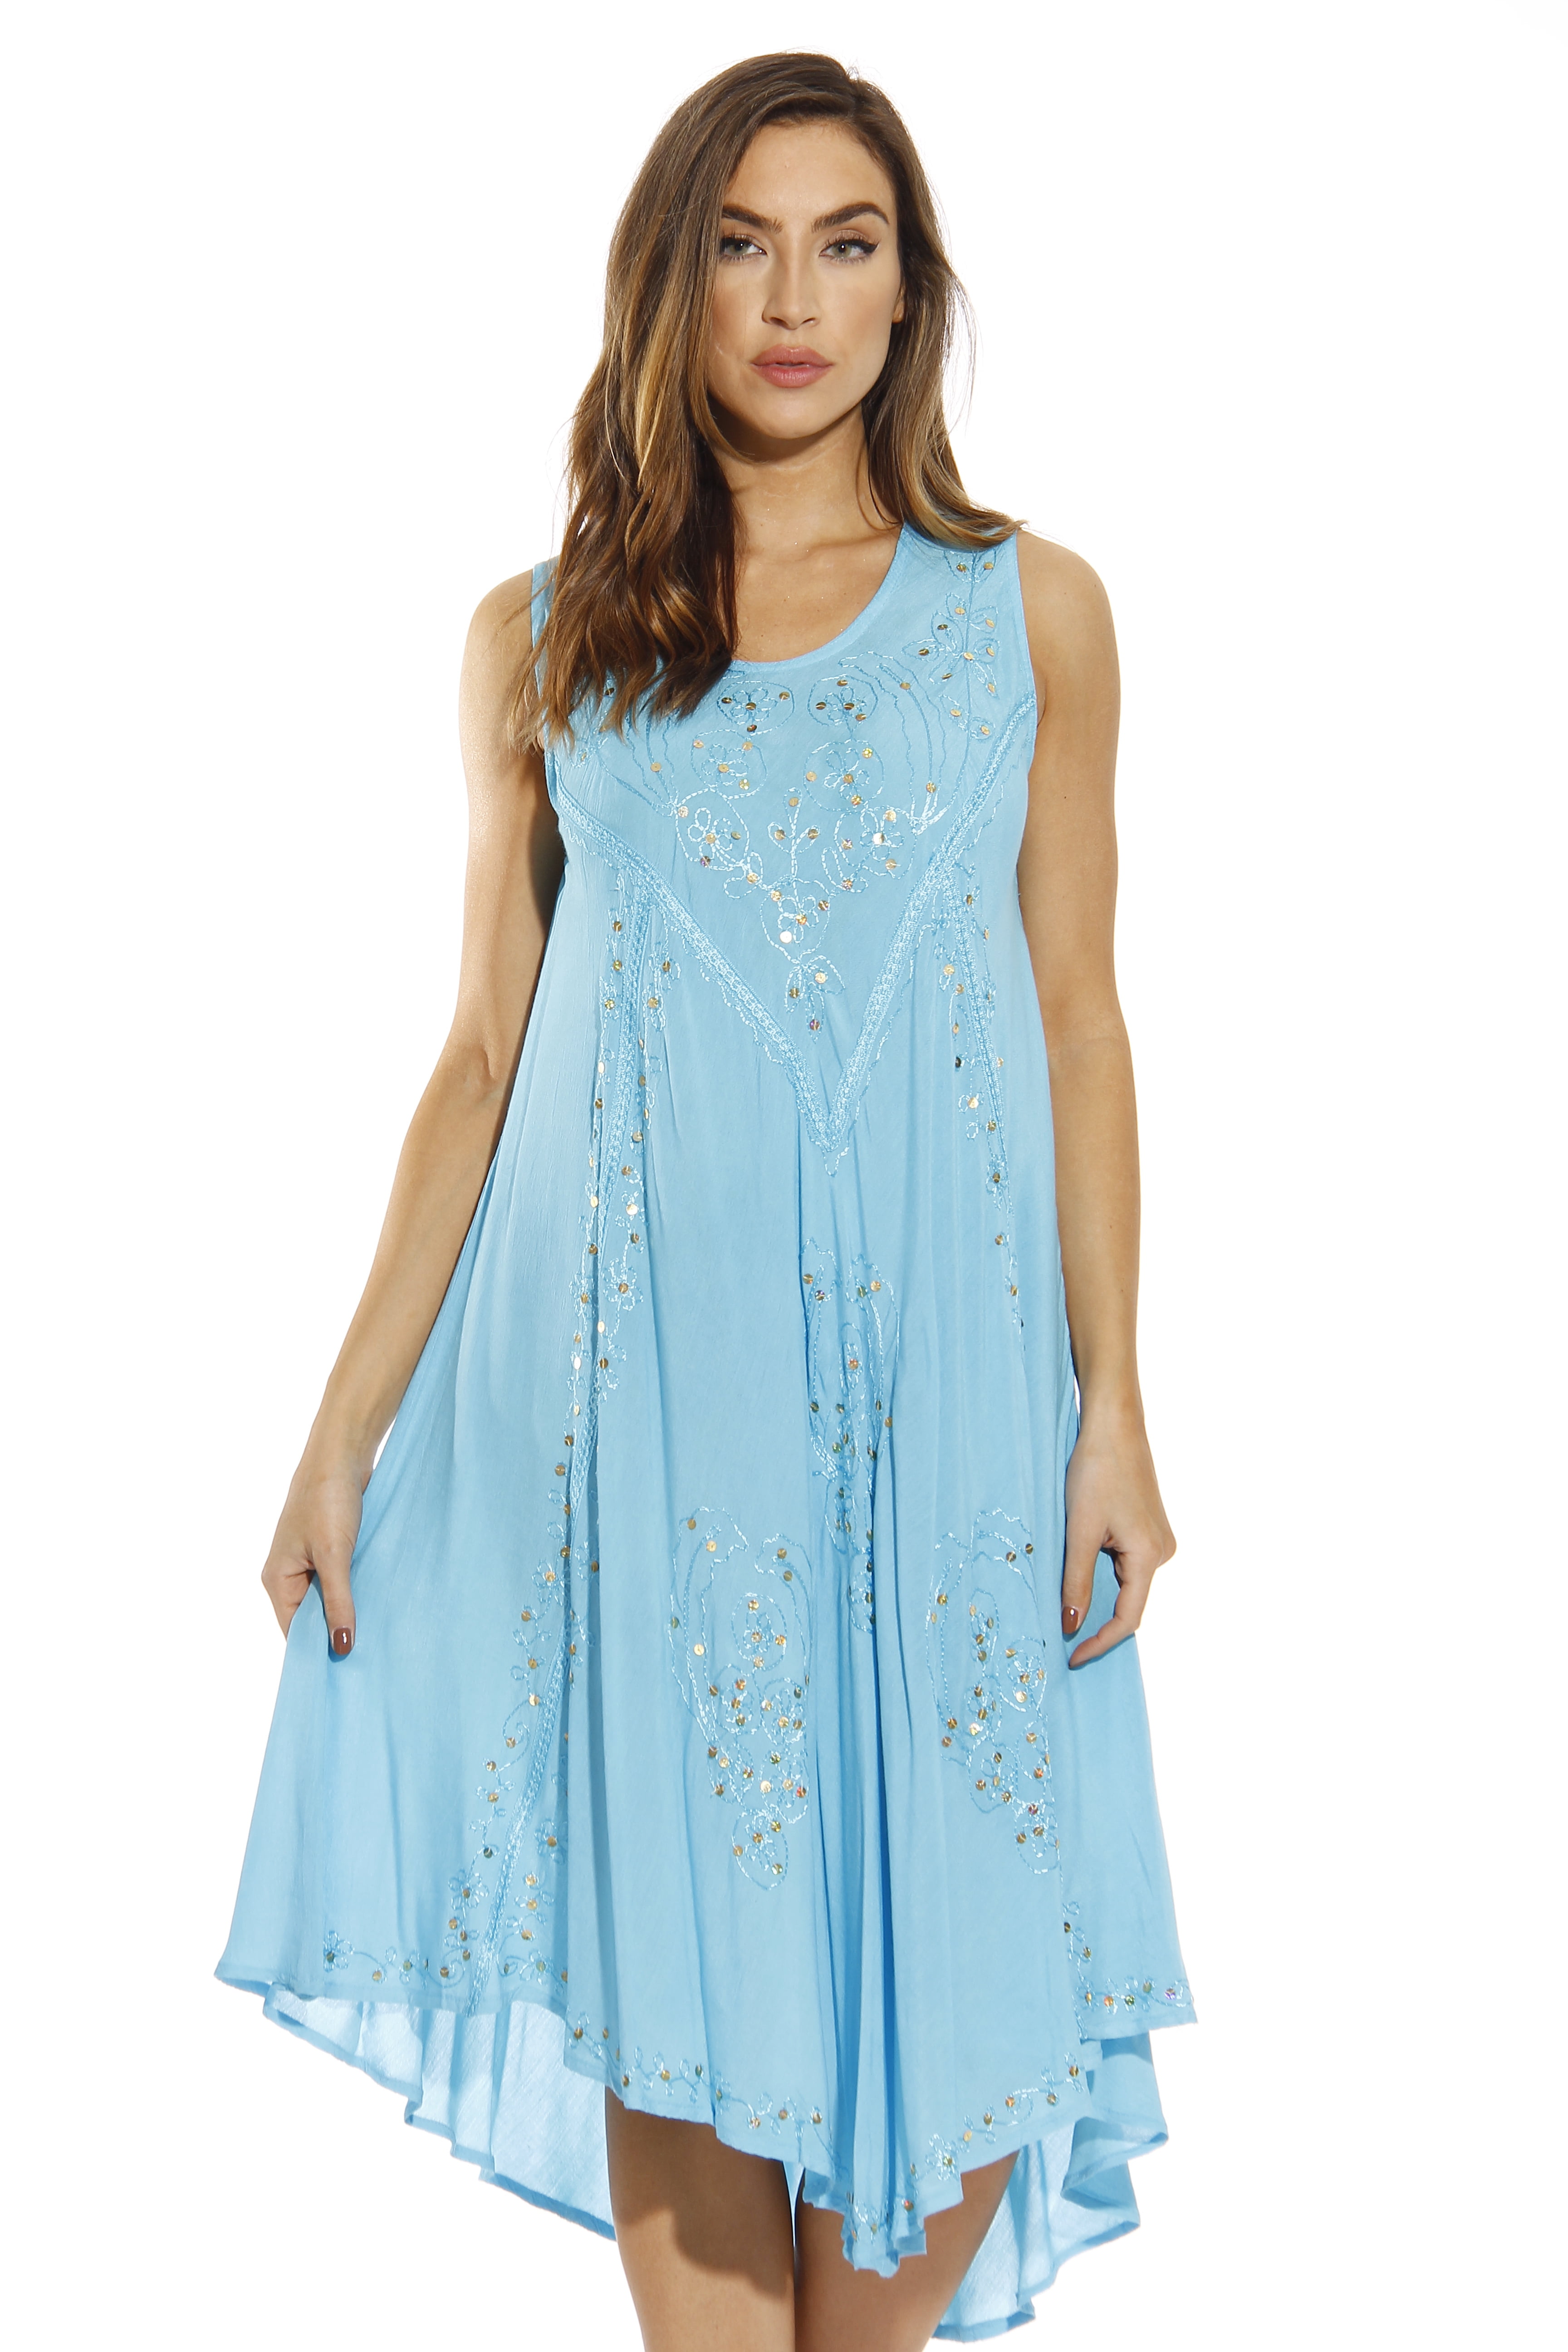 Riviera Sun - Riviera Sun Dress Dresses for Women (Turquoise, Medium ...